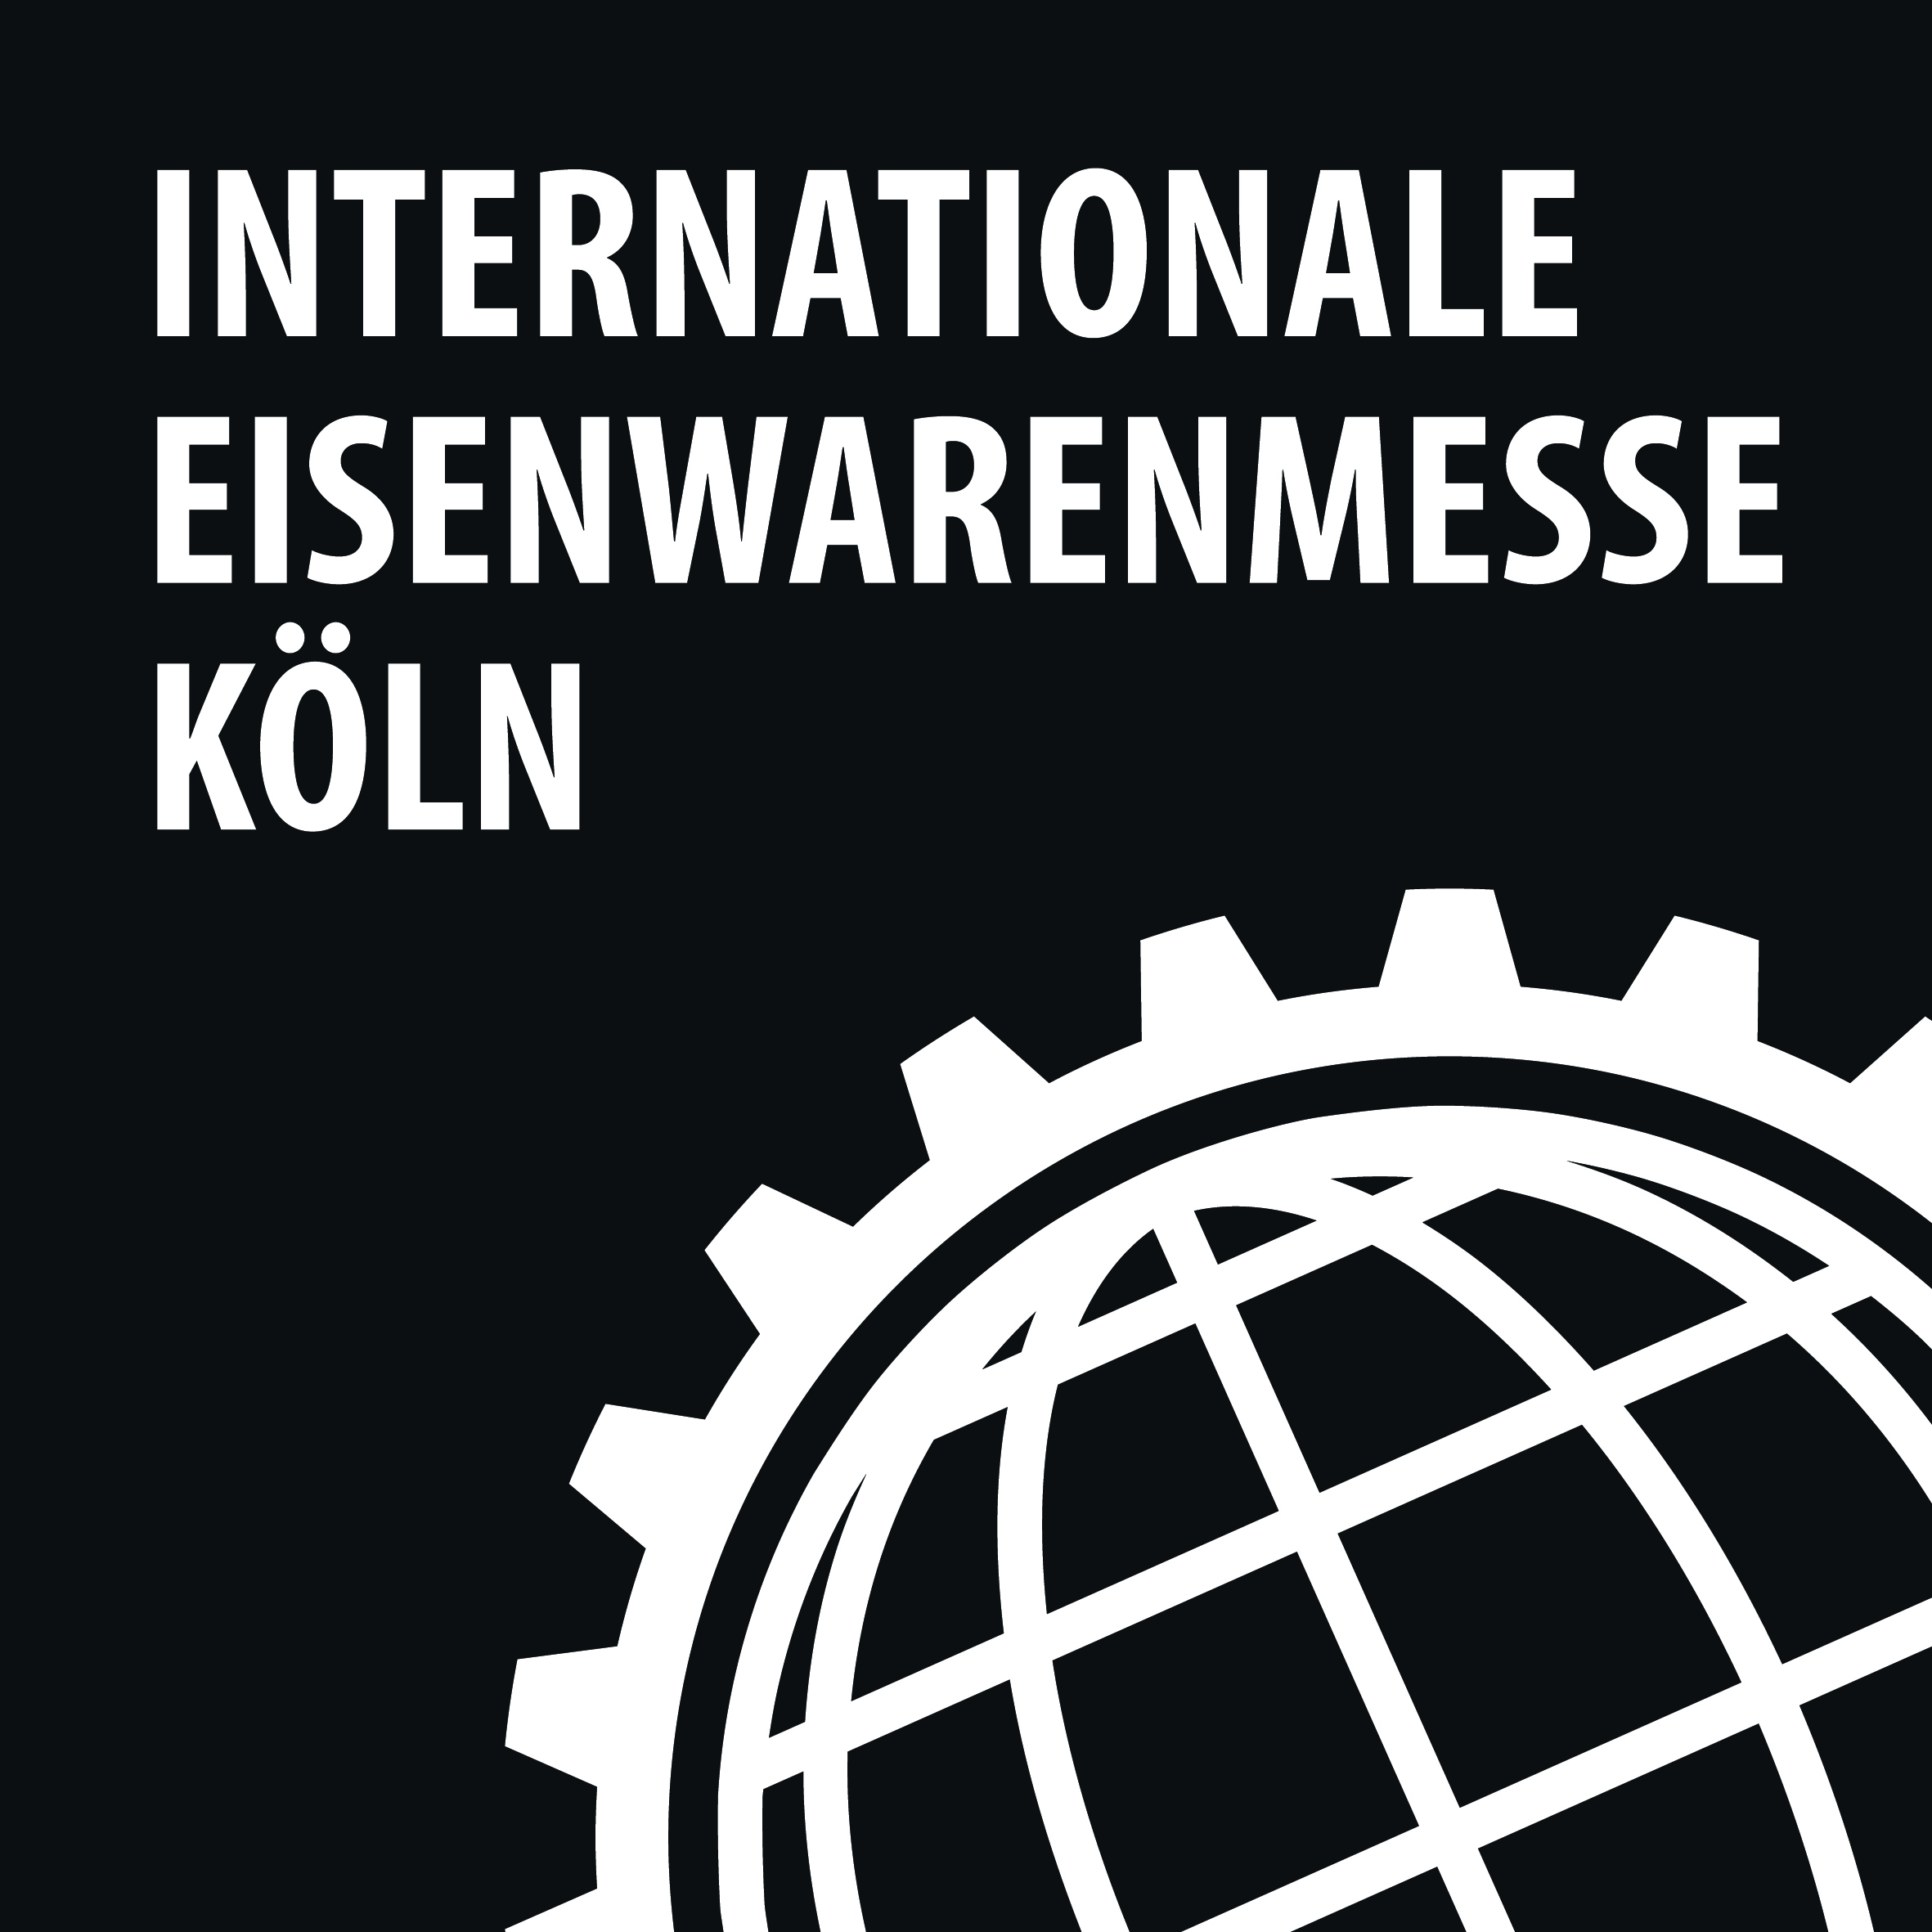 EISENWARENMESSE – INTERNATIONAL HARDWARE FAIR COLOGNE moved to September 2022